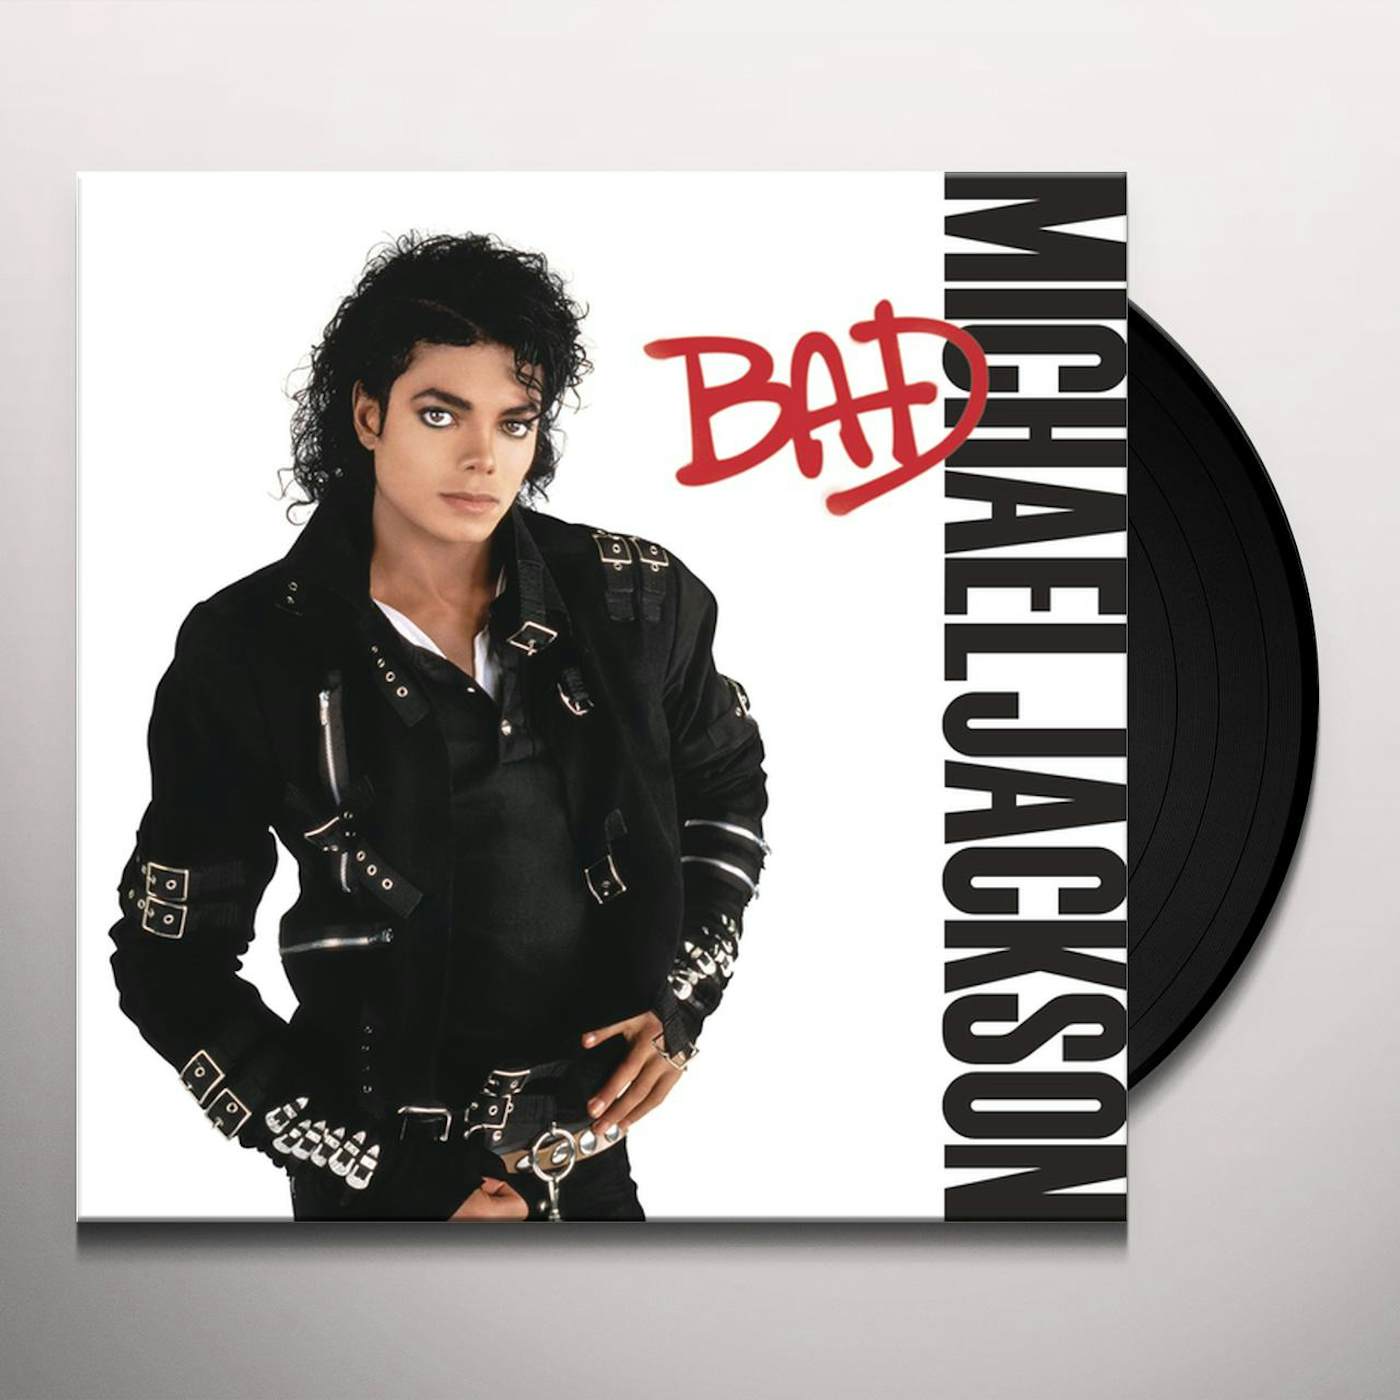 MICHAEL JACKSON 5 Greatest Hits Vinyl Picture Disc LP New POSTER